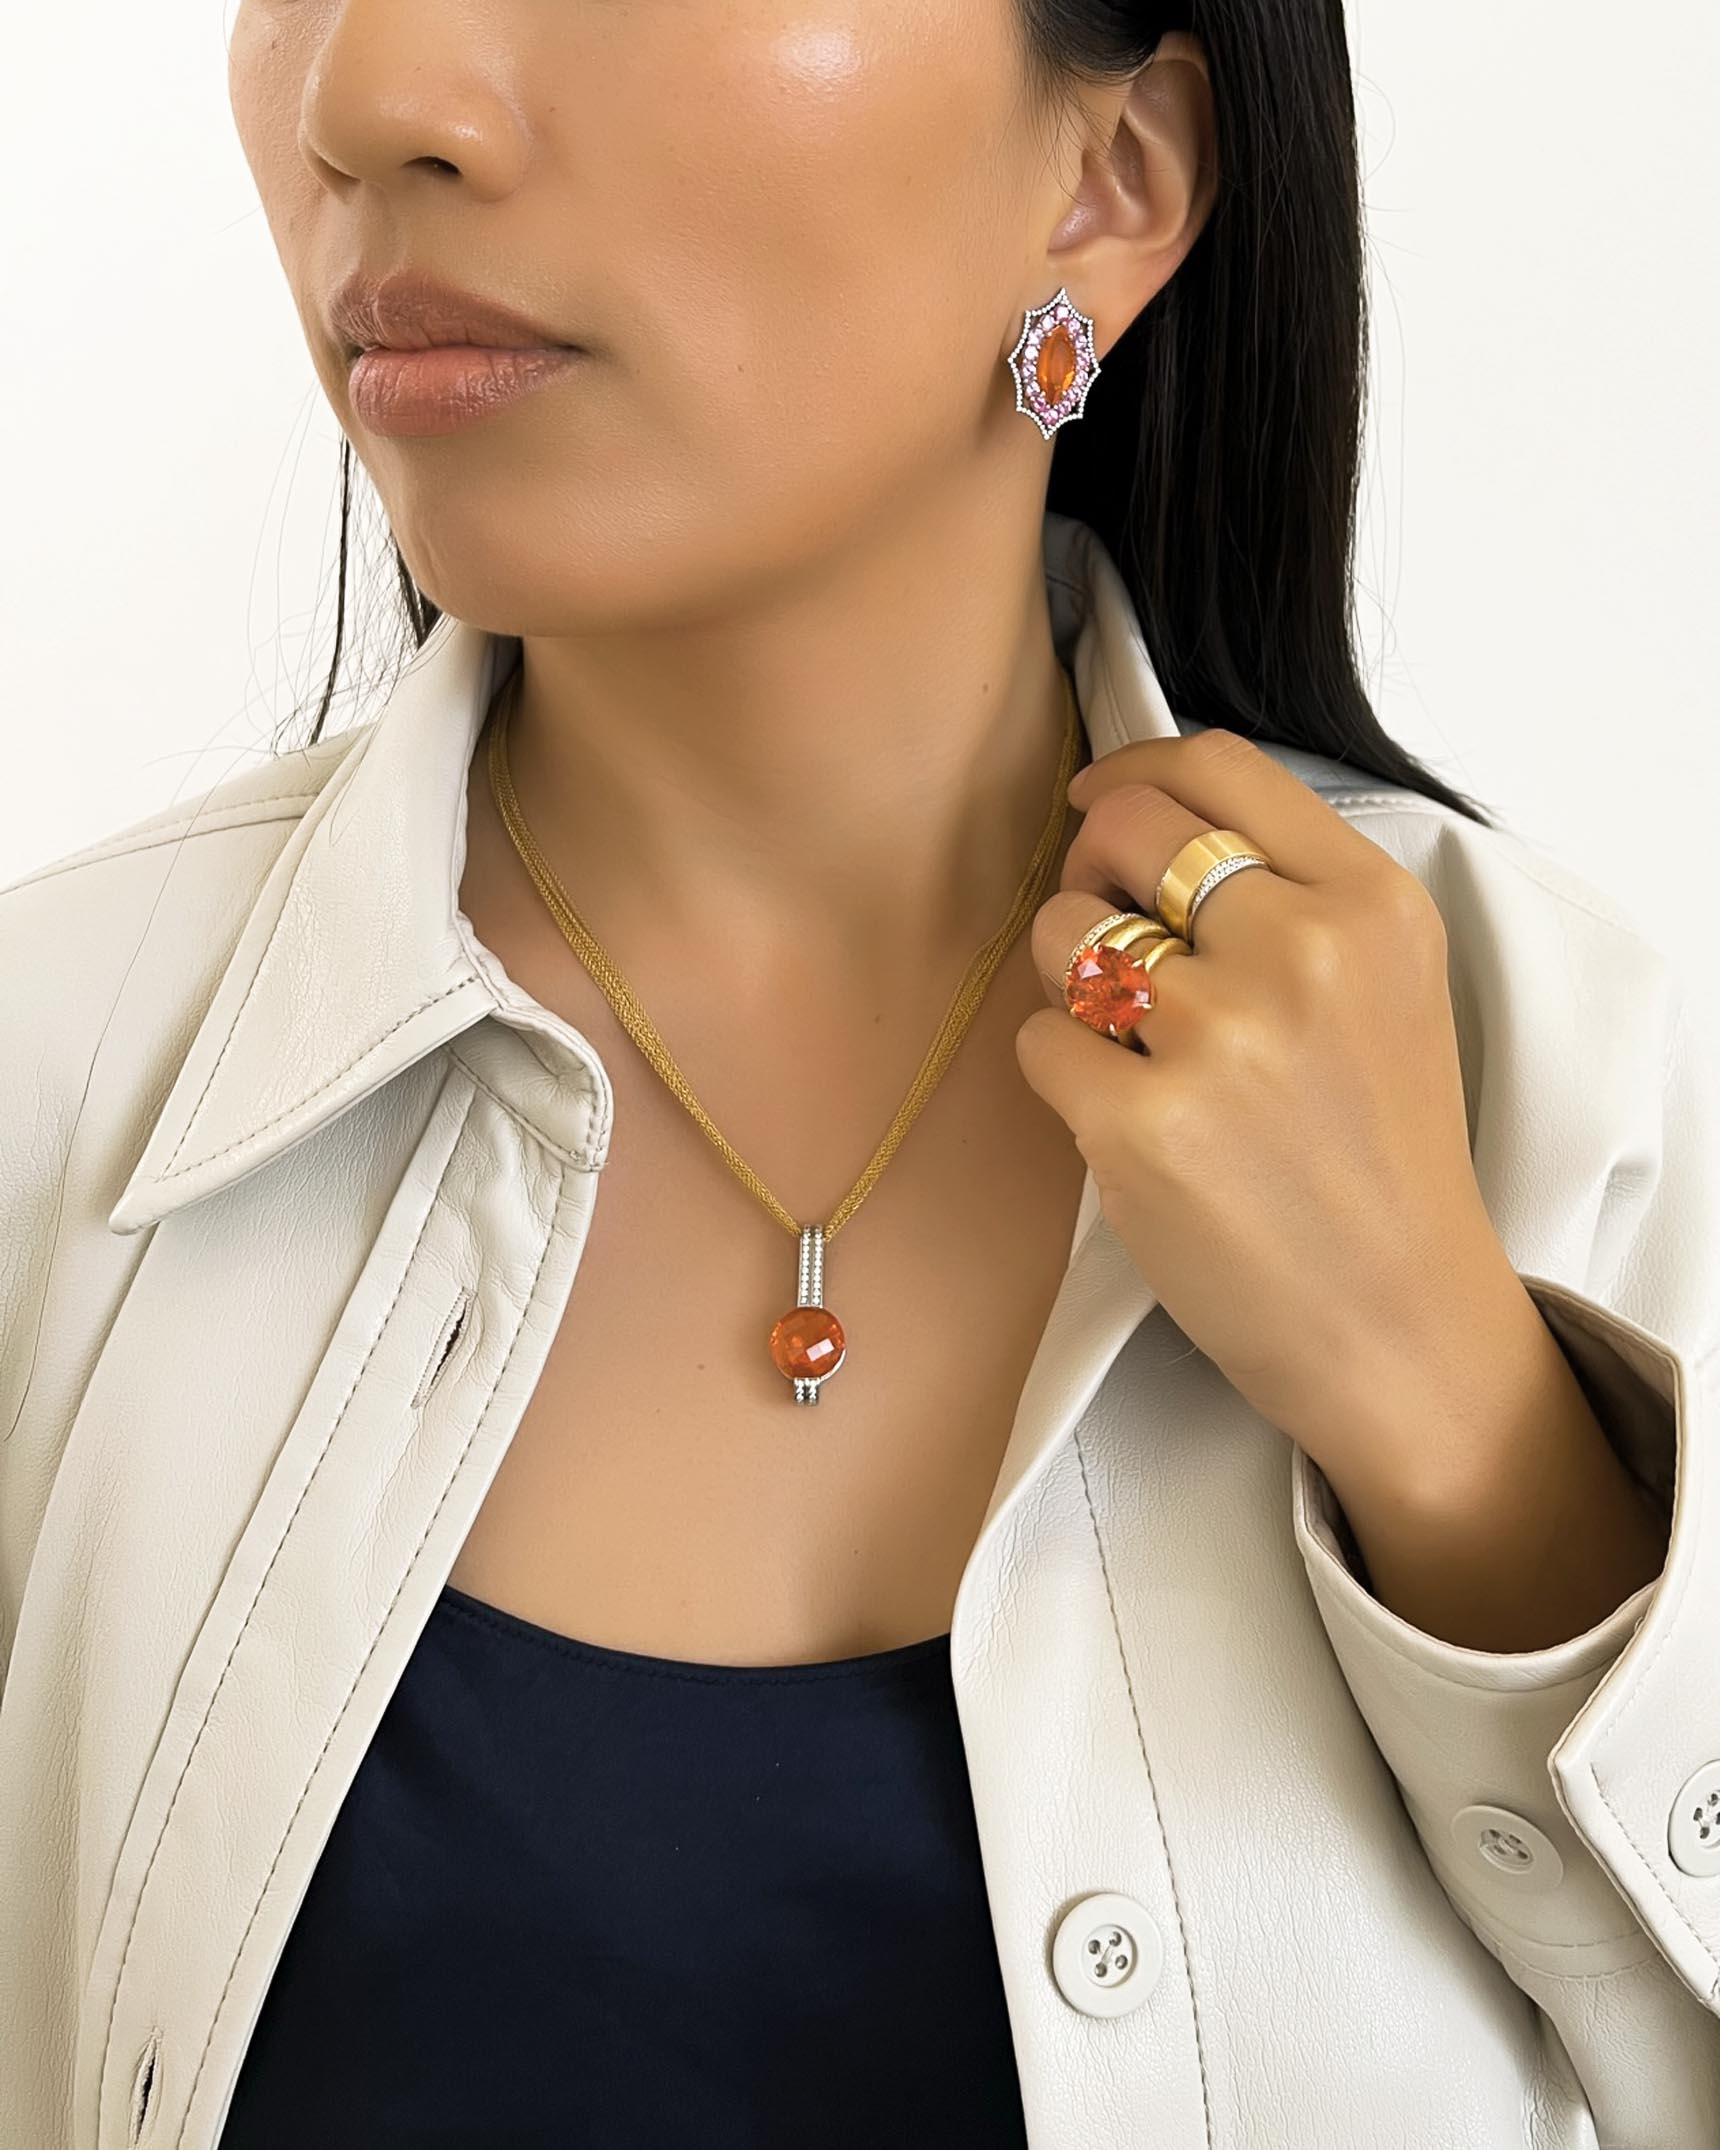 Orange Gemstone_Diamond and Yellow Gold Earrings_Rings and Necklace ECDKK02525 – RWEDD04587 – RADRG00036 – RWEDY00778 – RCMS02696 – PNMTG01697